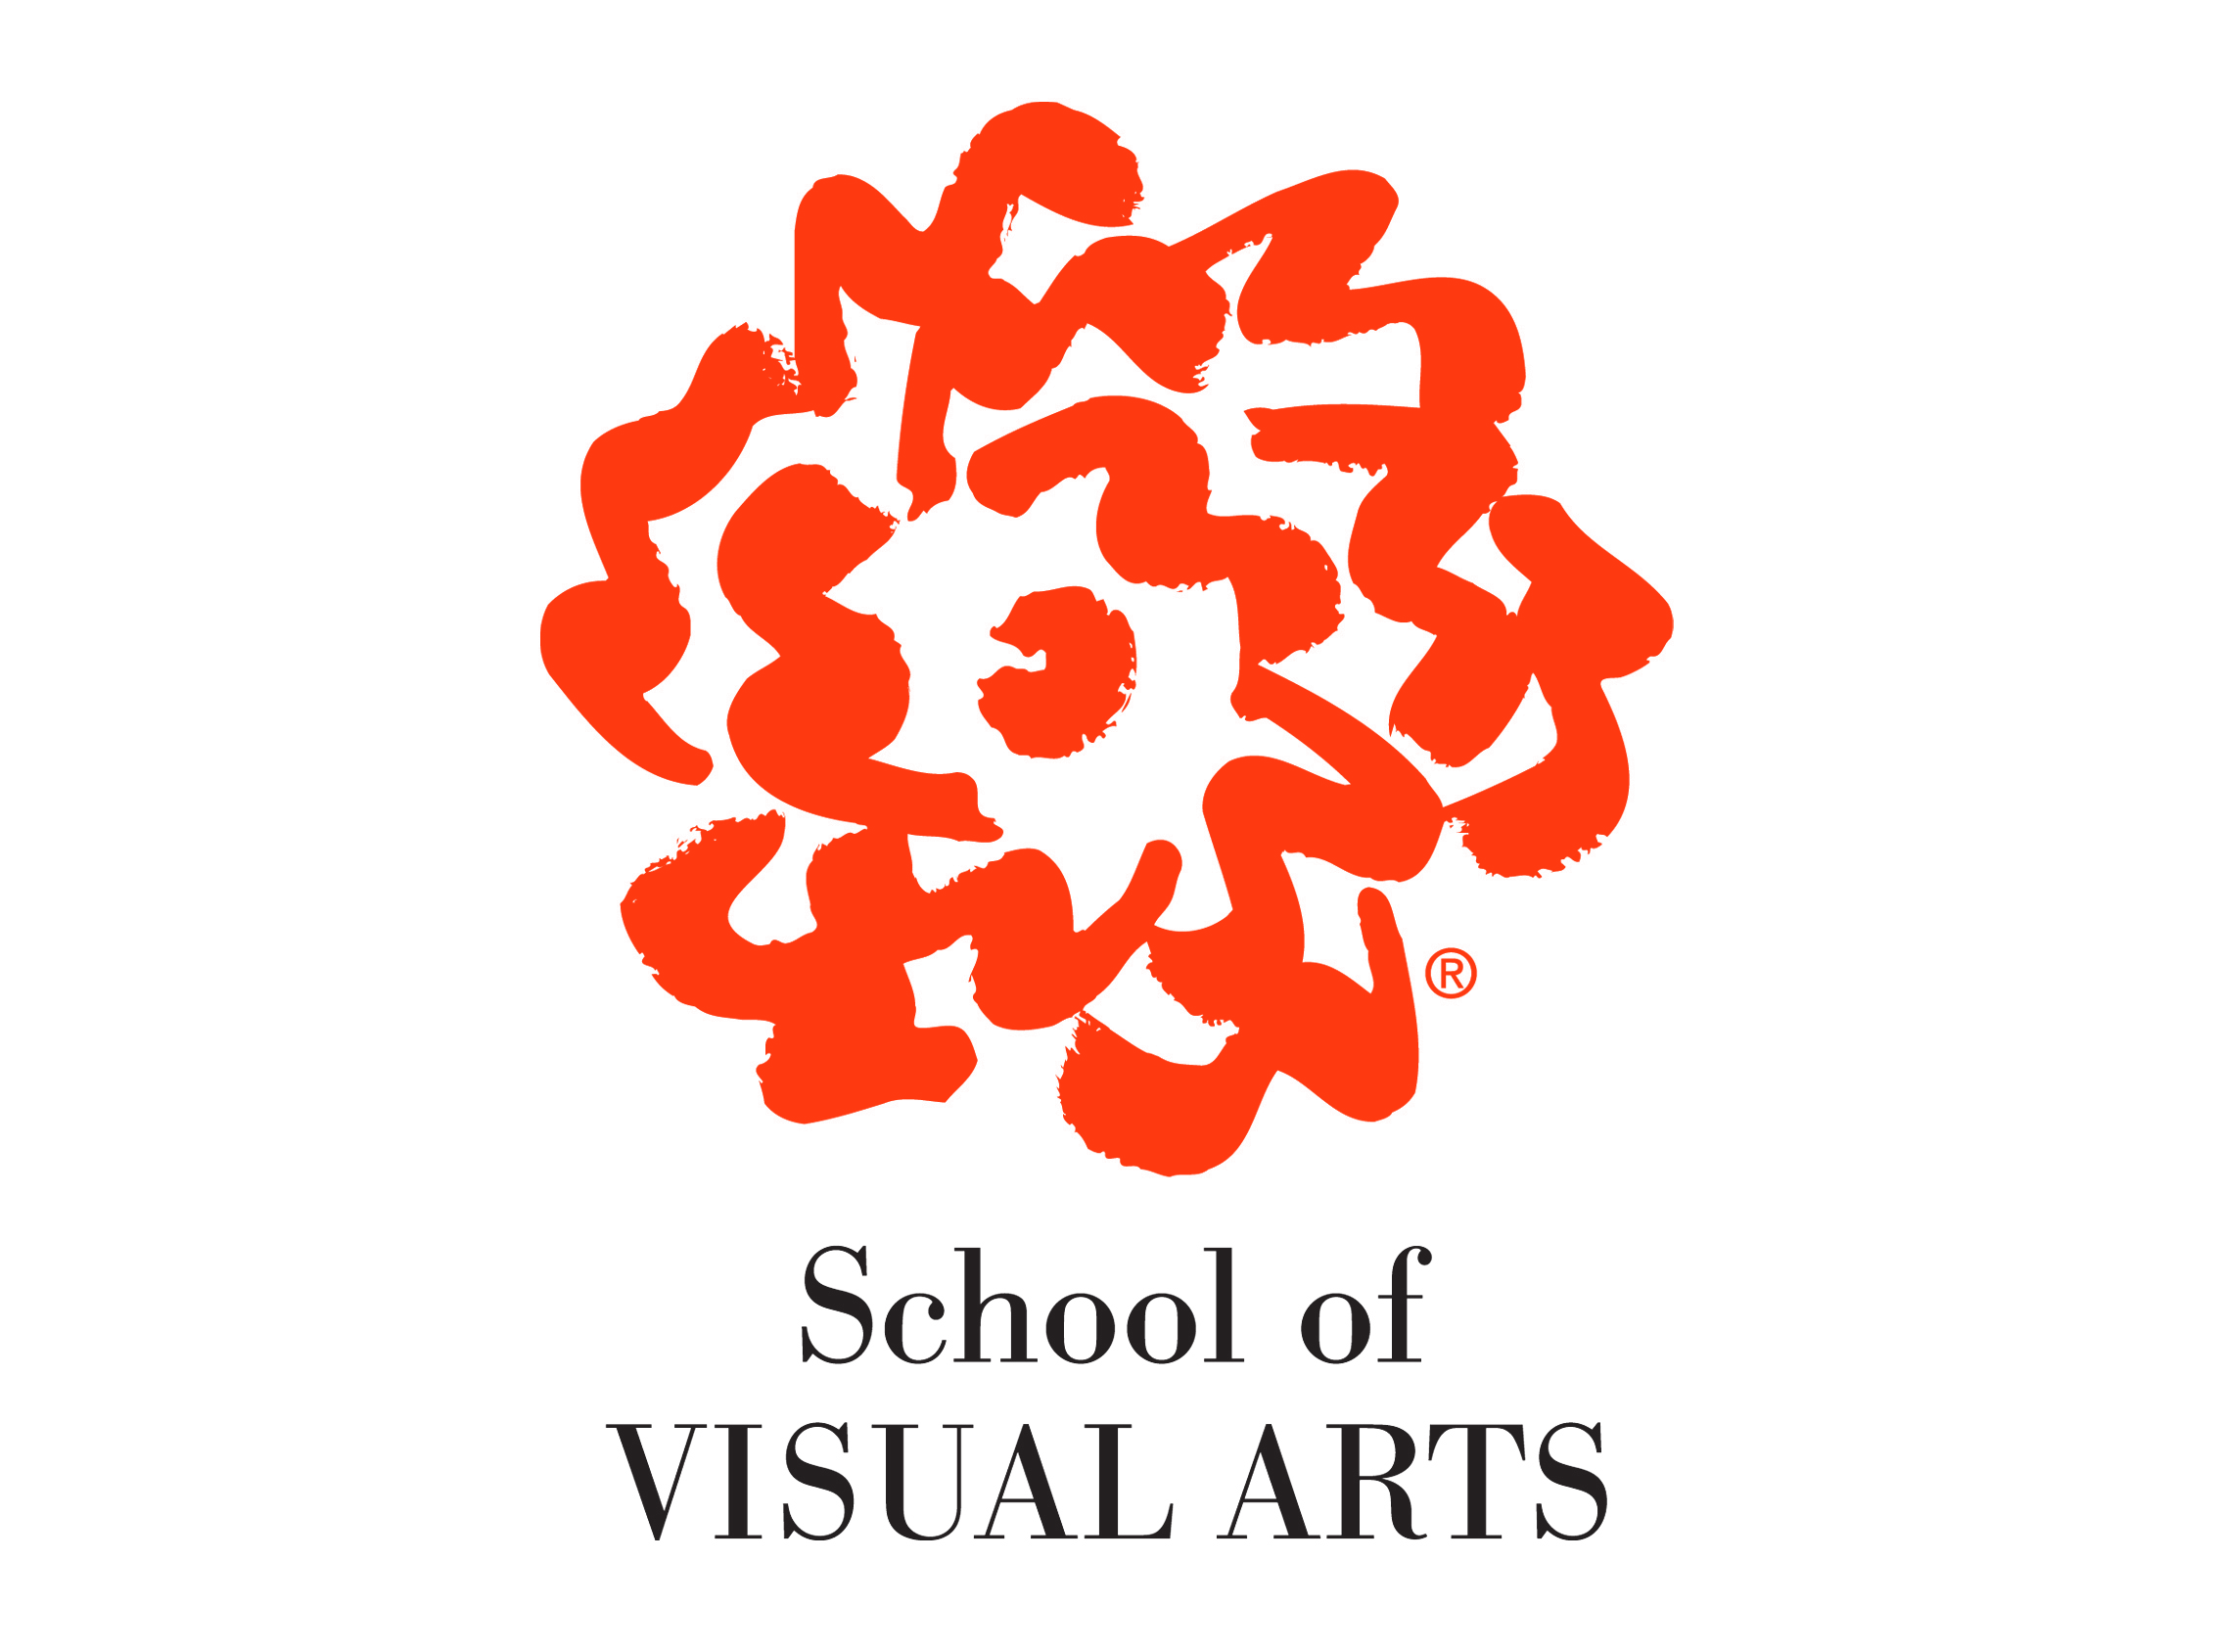 School of Visual Arts logo